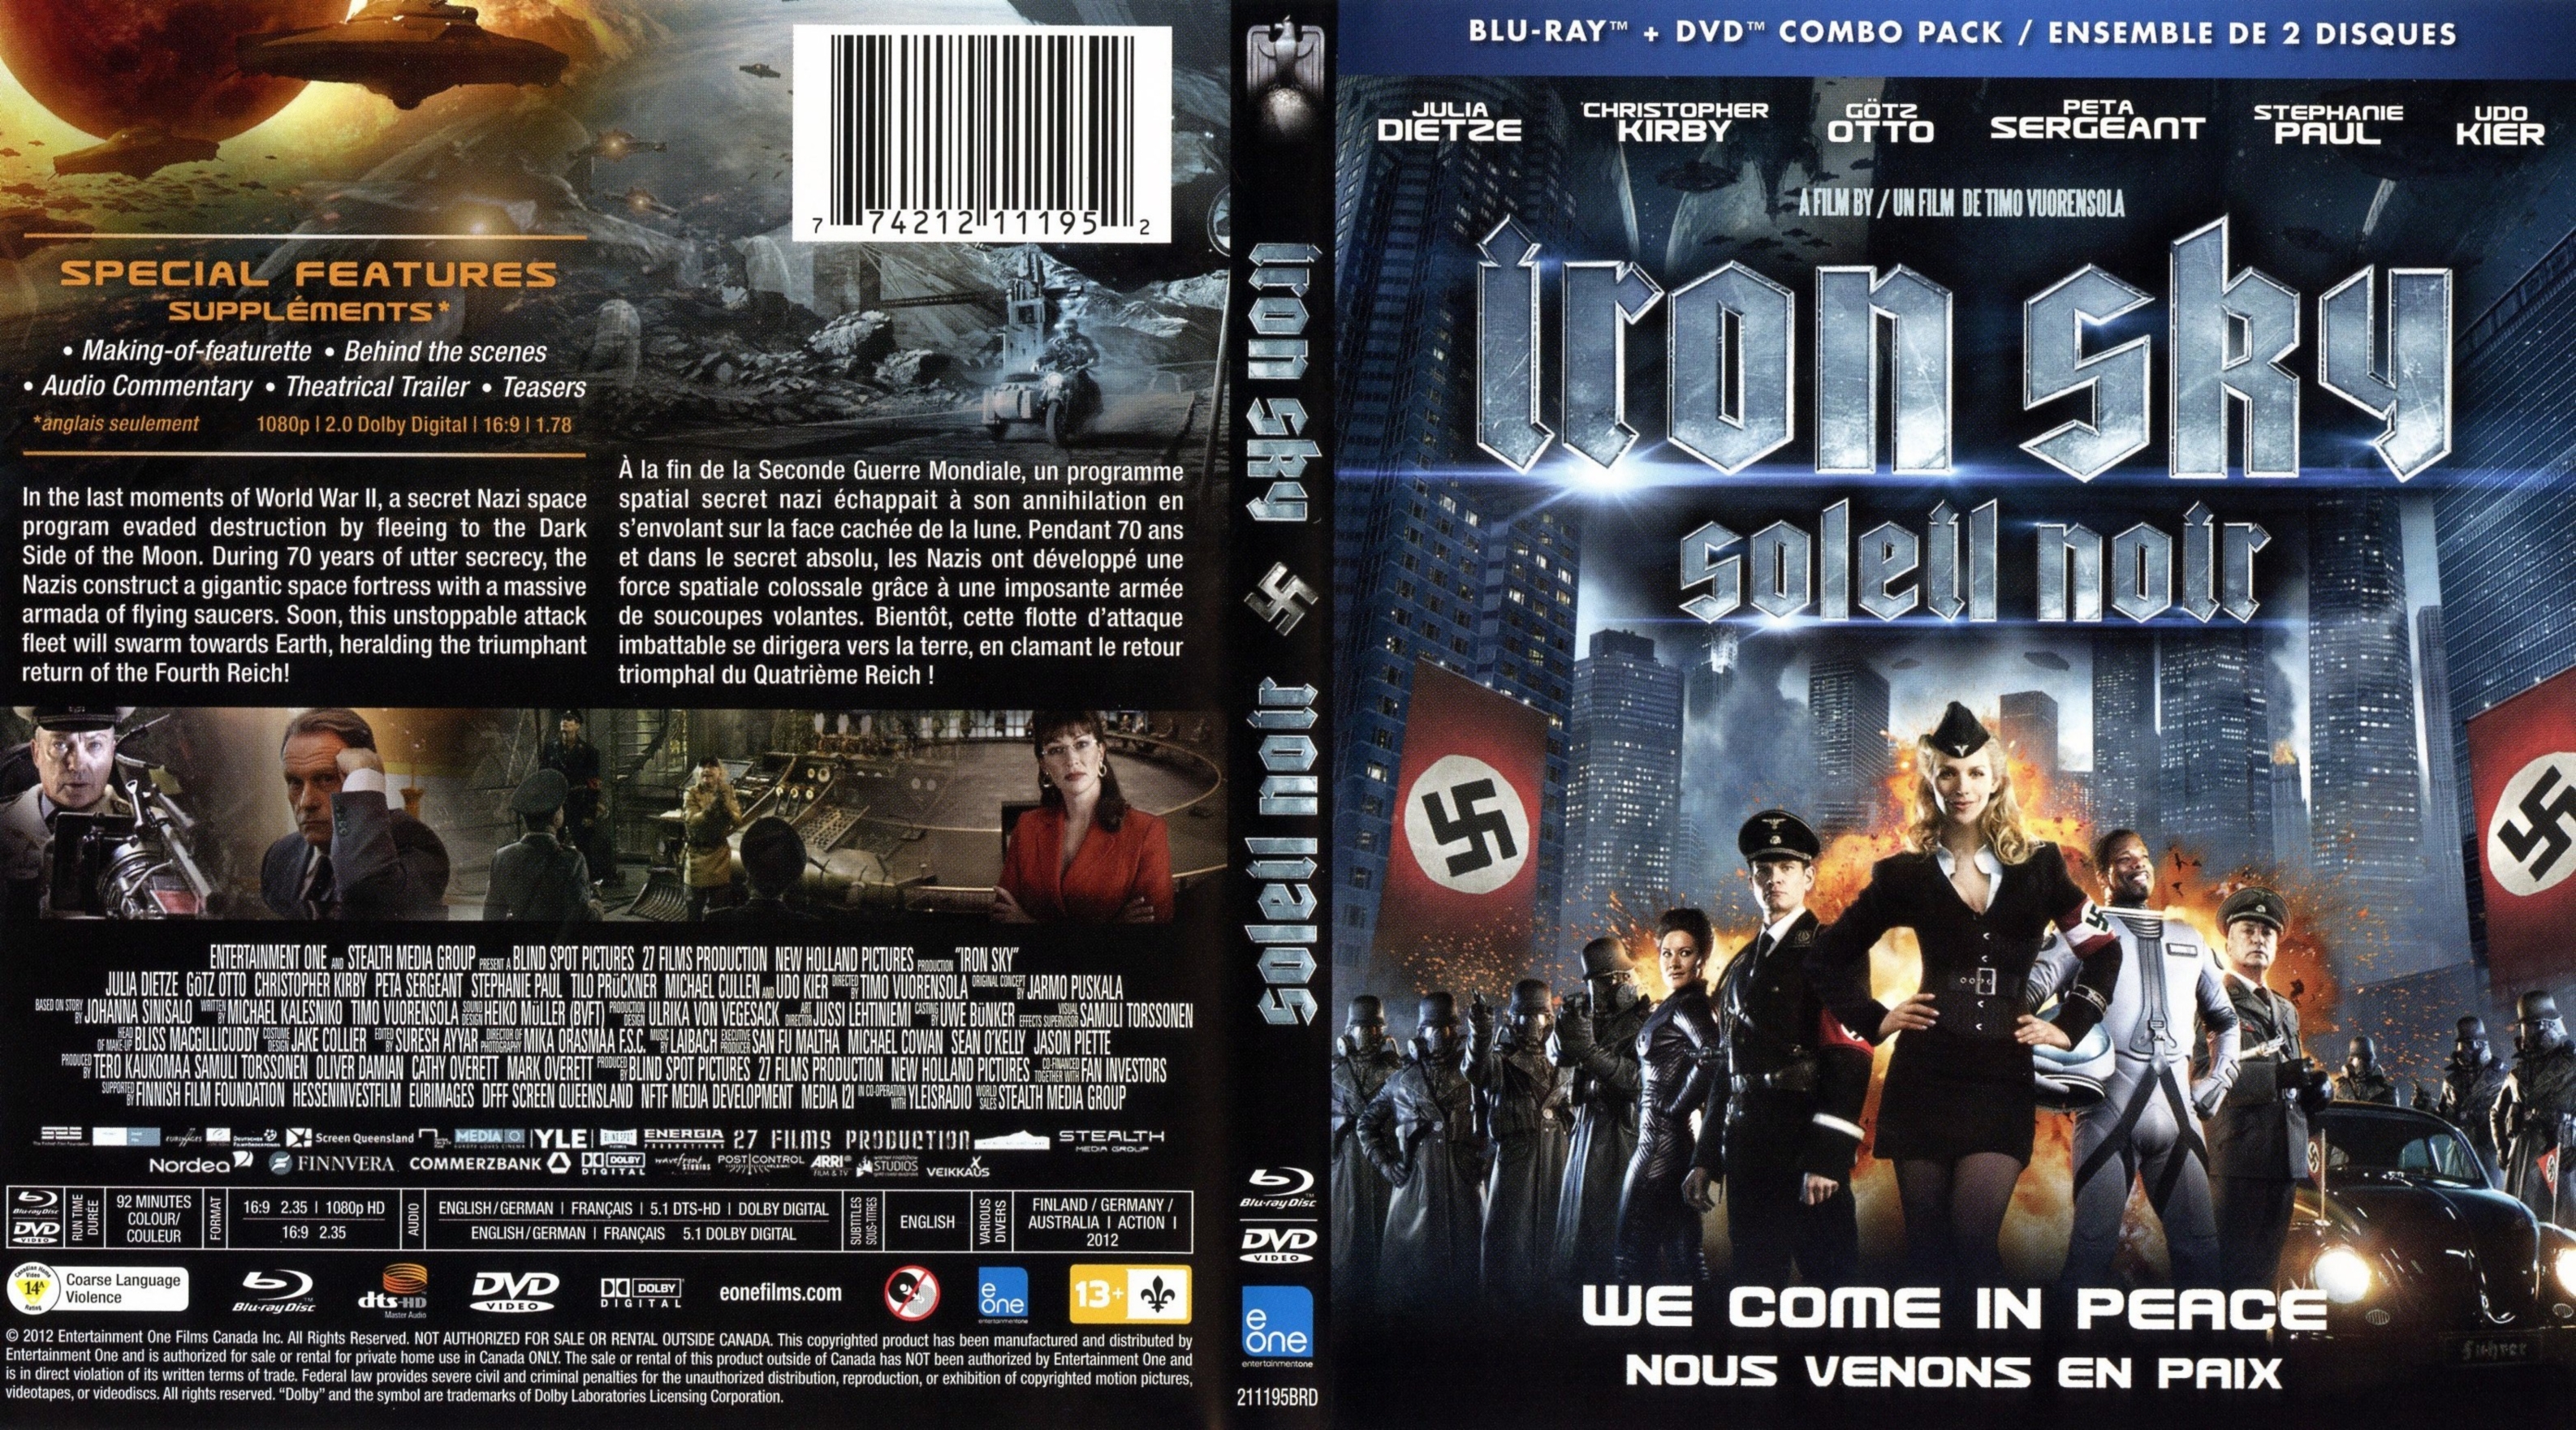 Jaquette DVD Soreil Noir - Iron Sky (Canadienne) (BLU-RAY)